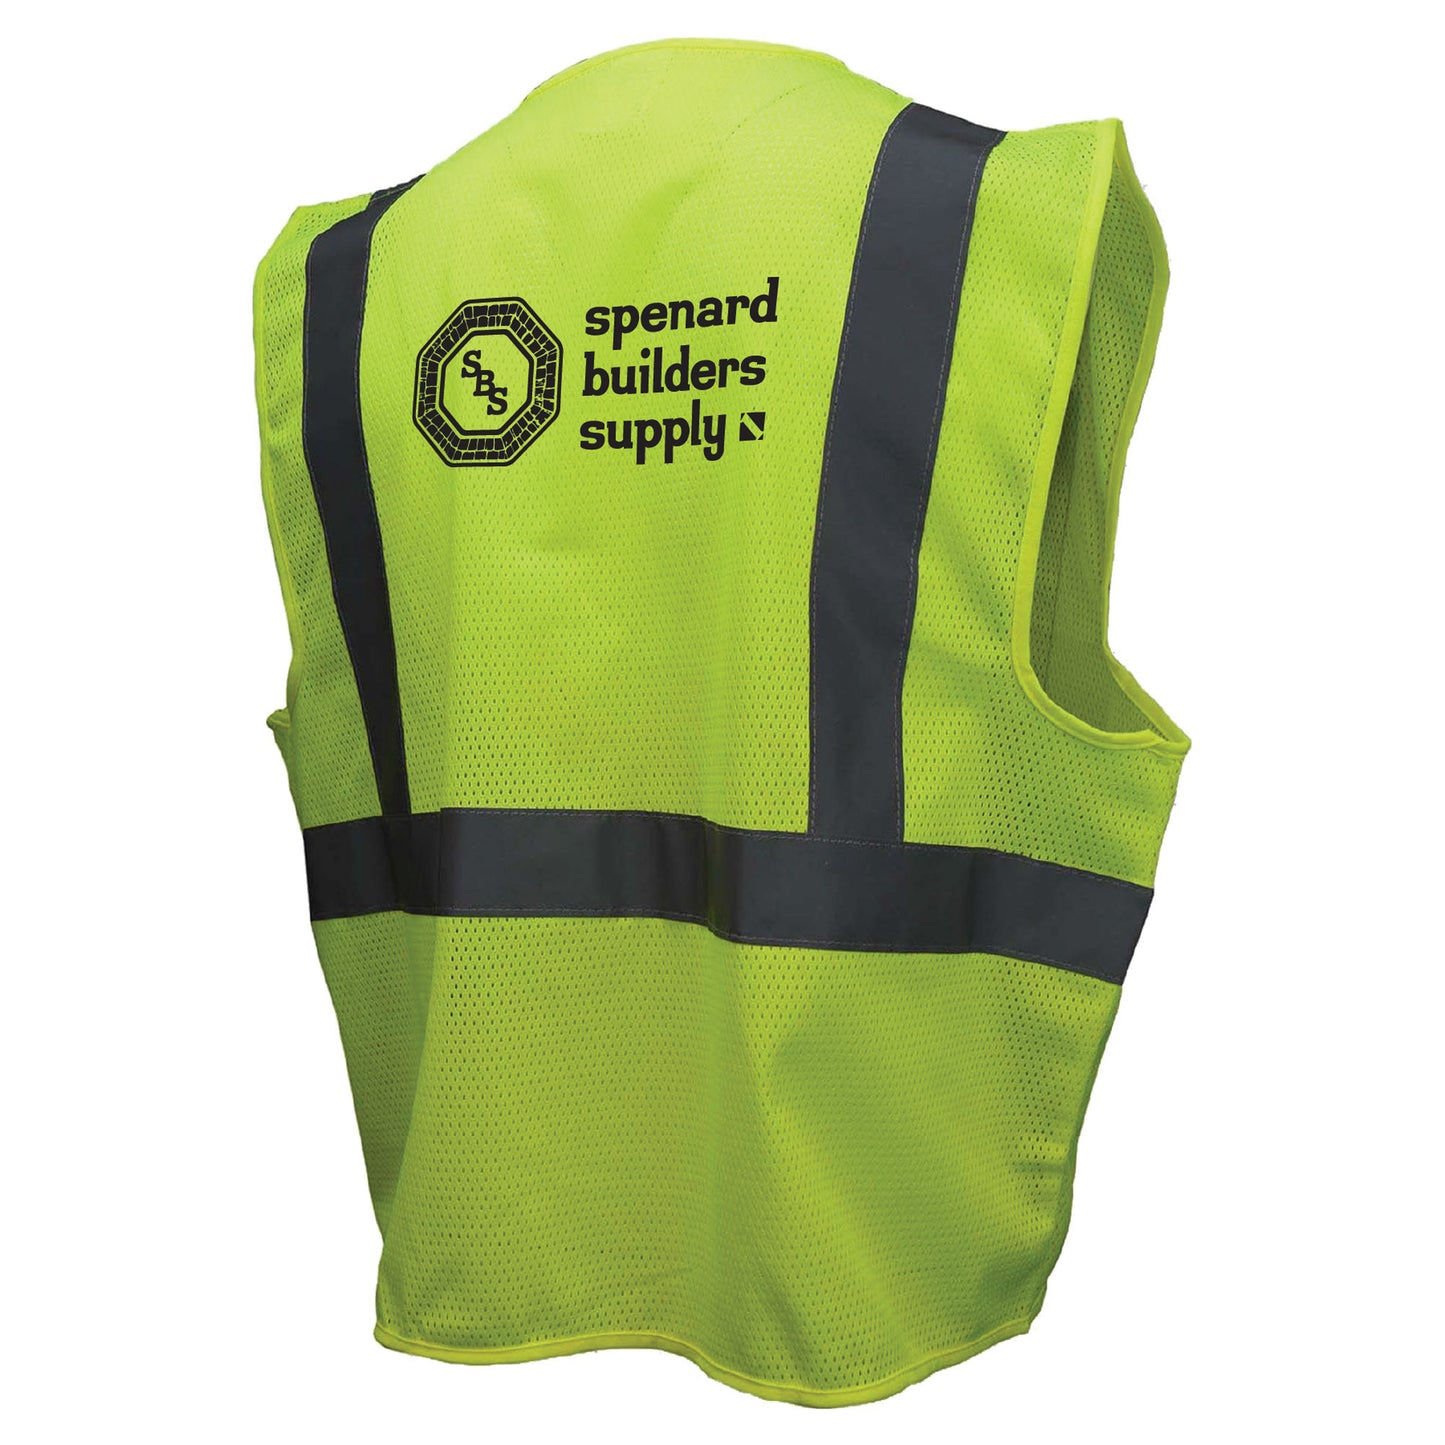 Spenard - Economy Mesh Safety Vest with Zipper, ANSI 2, R